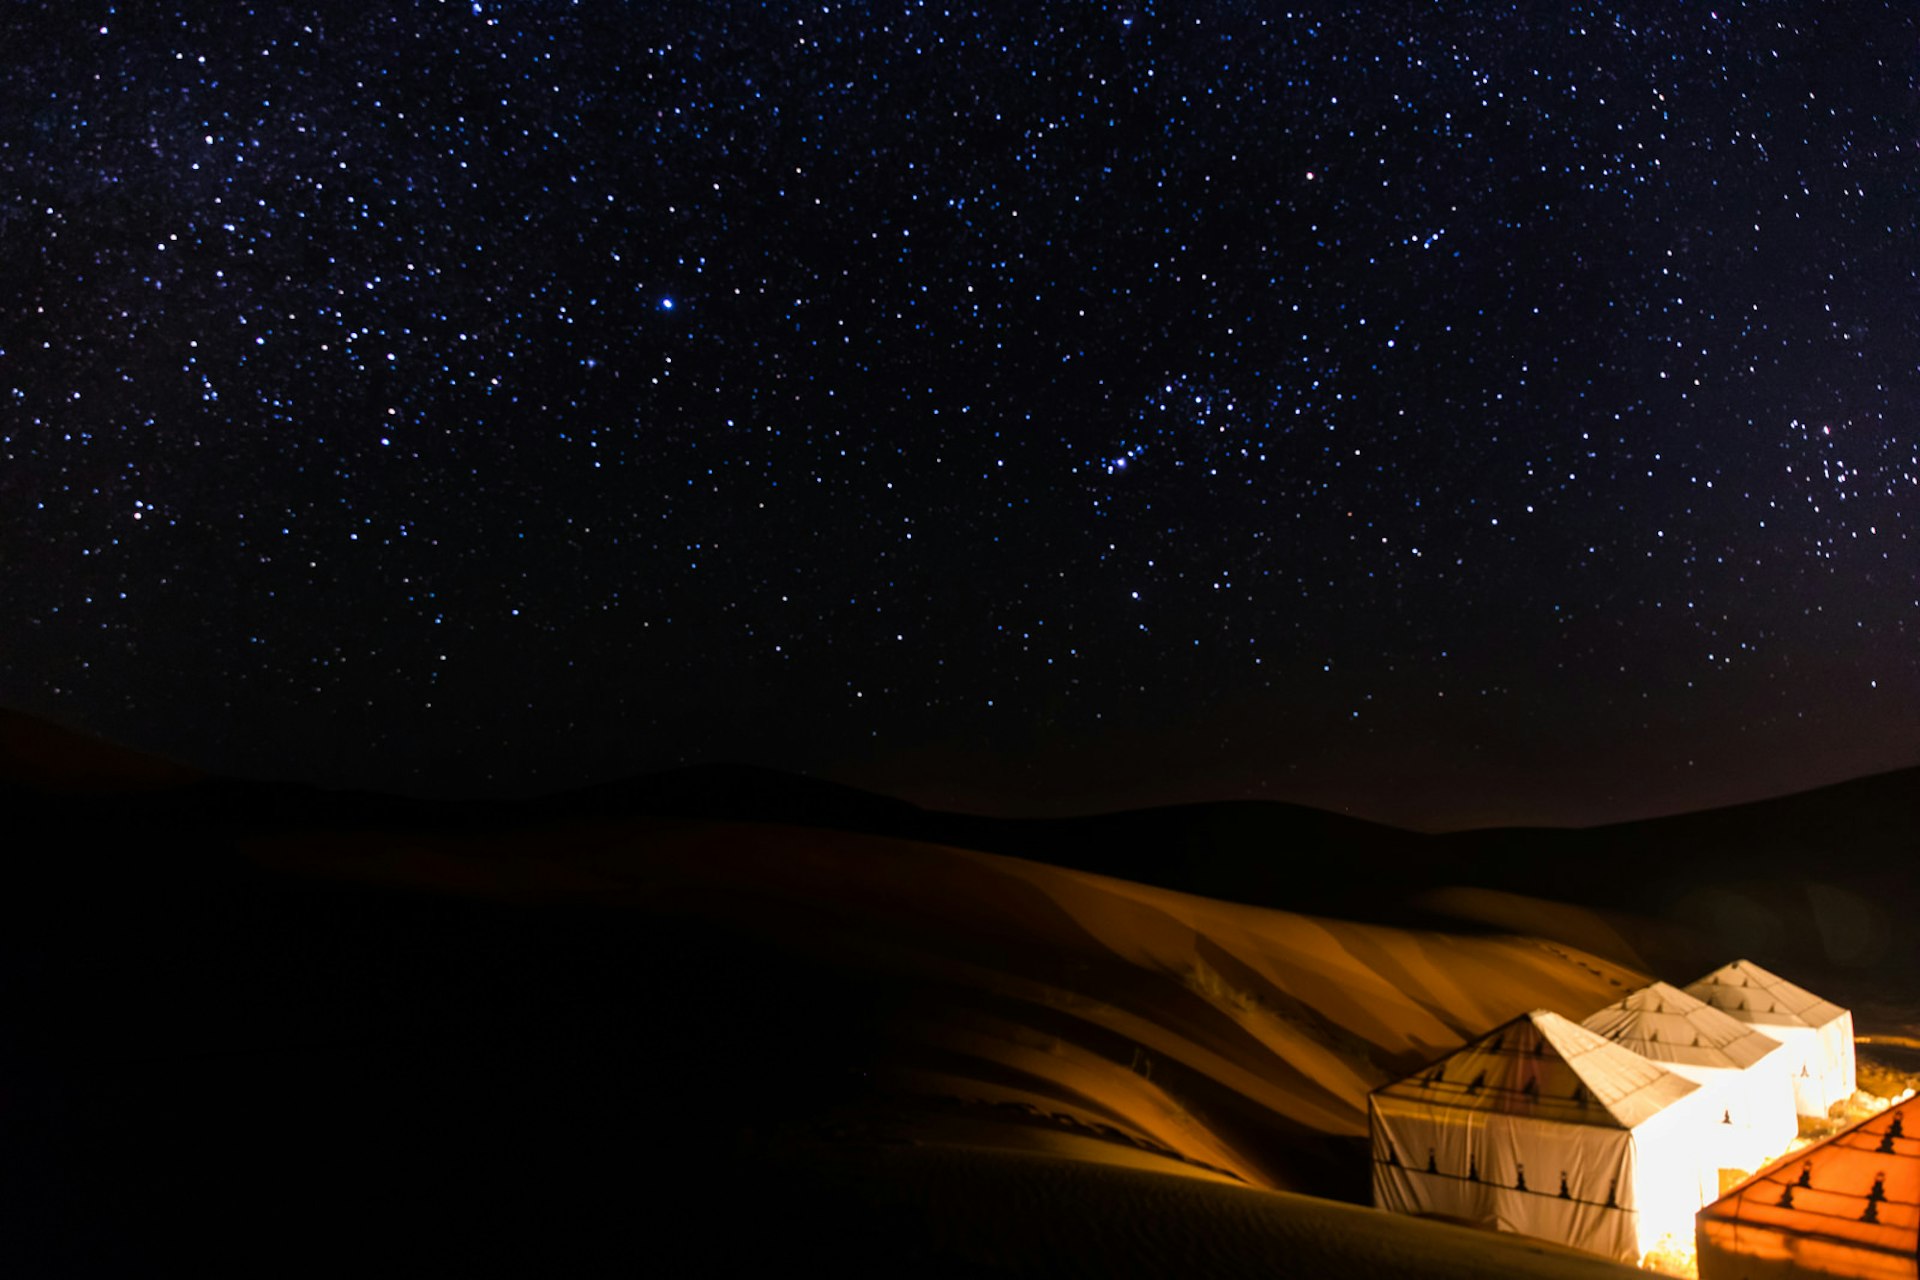 Nights in the Sahara are clear and starry © Jianwei Zhu / Shutterstock